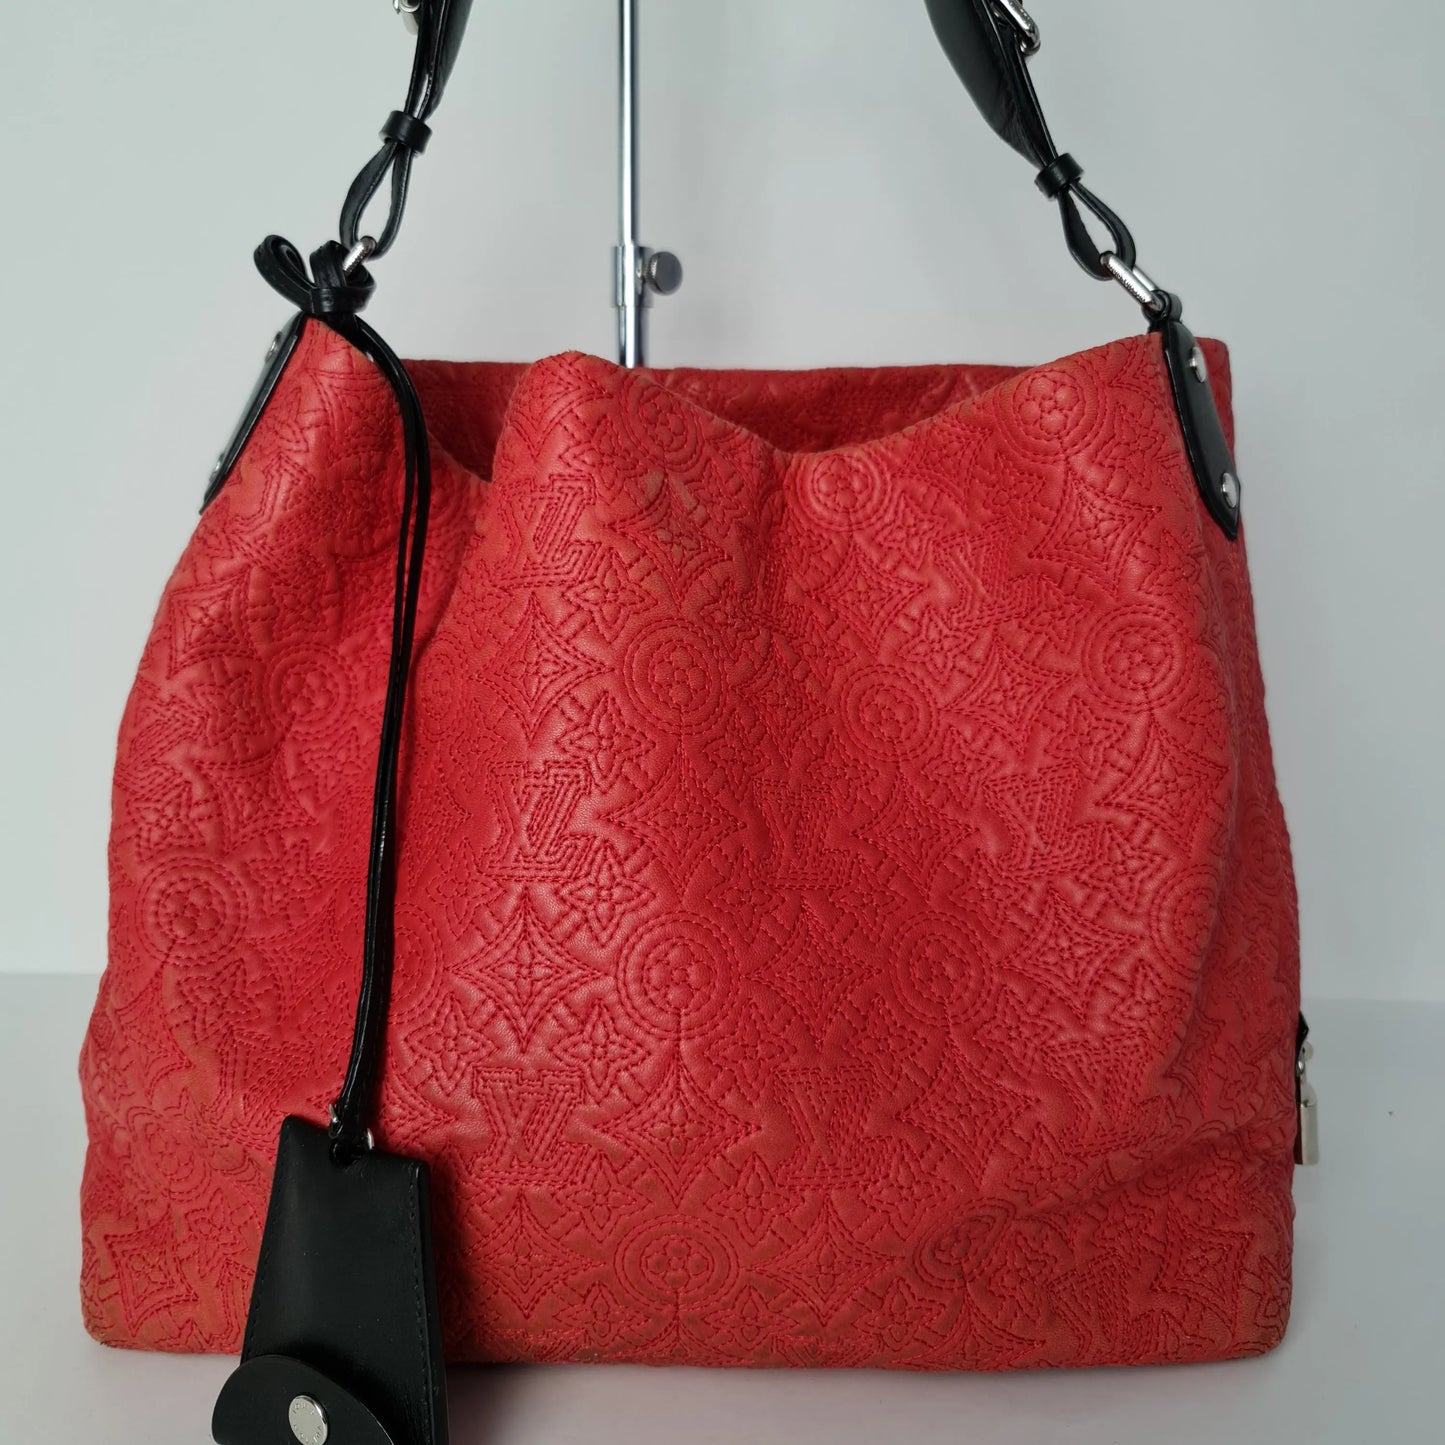 Preloved Louis Vuitton Leather Antheia Hobo PM Bag FL4150 032423 –  KimmieBBags LLC